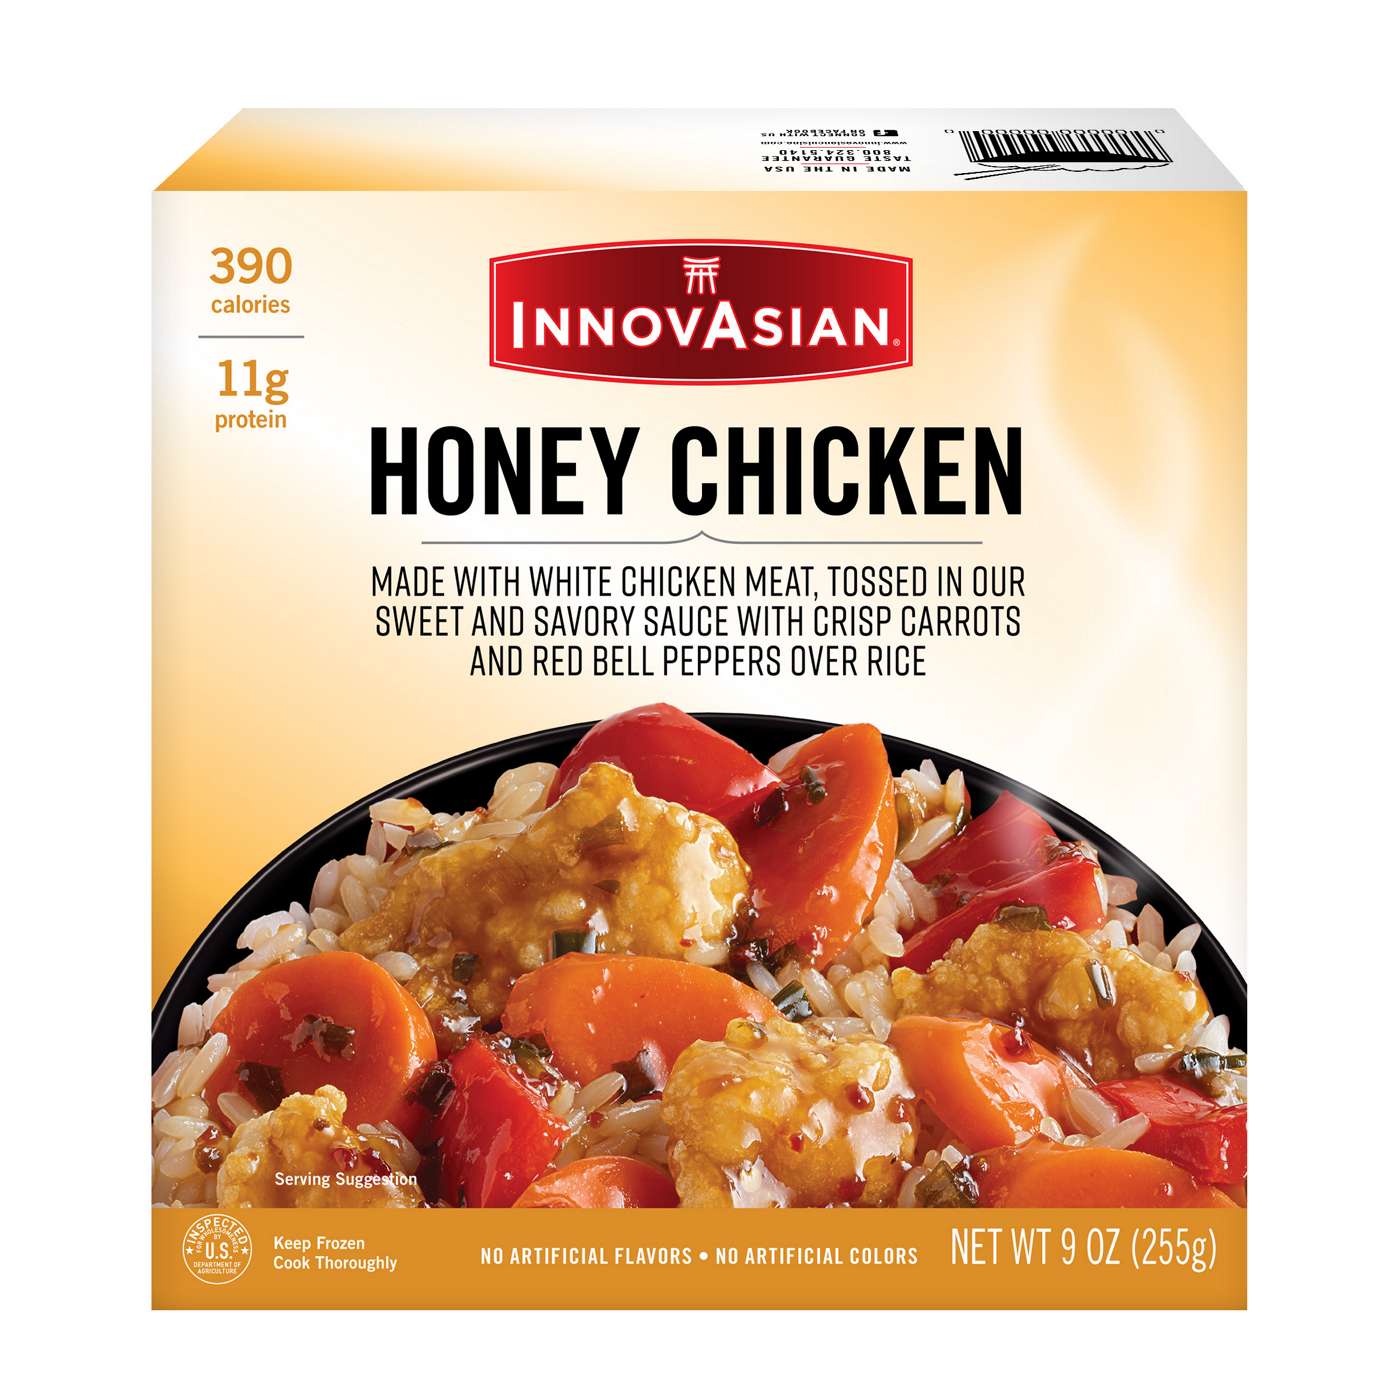 InnovAsian Honey Chicken Frozen Meal; image 1 of 2